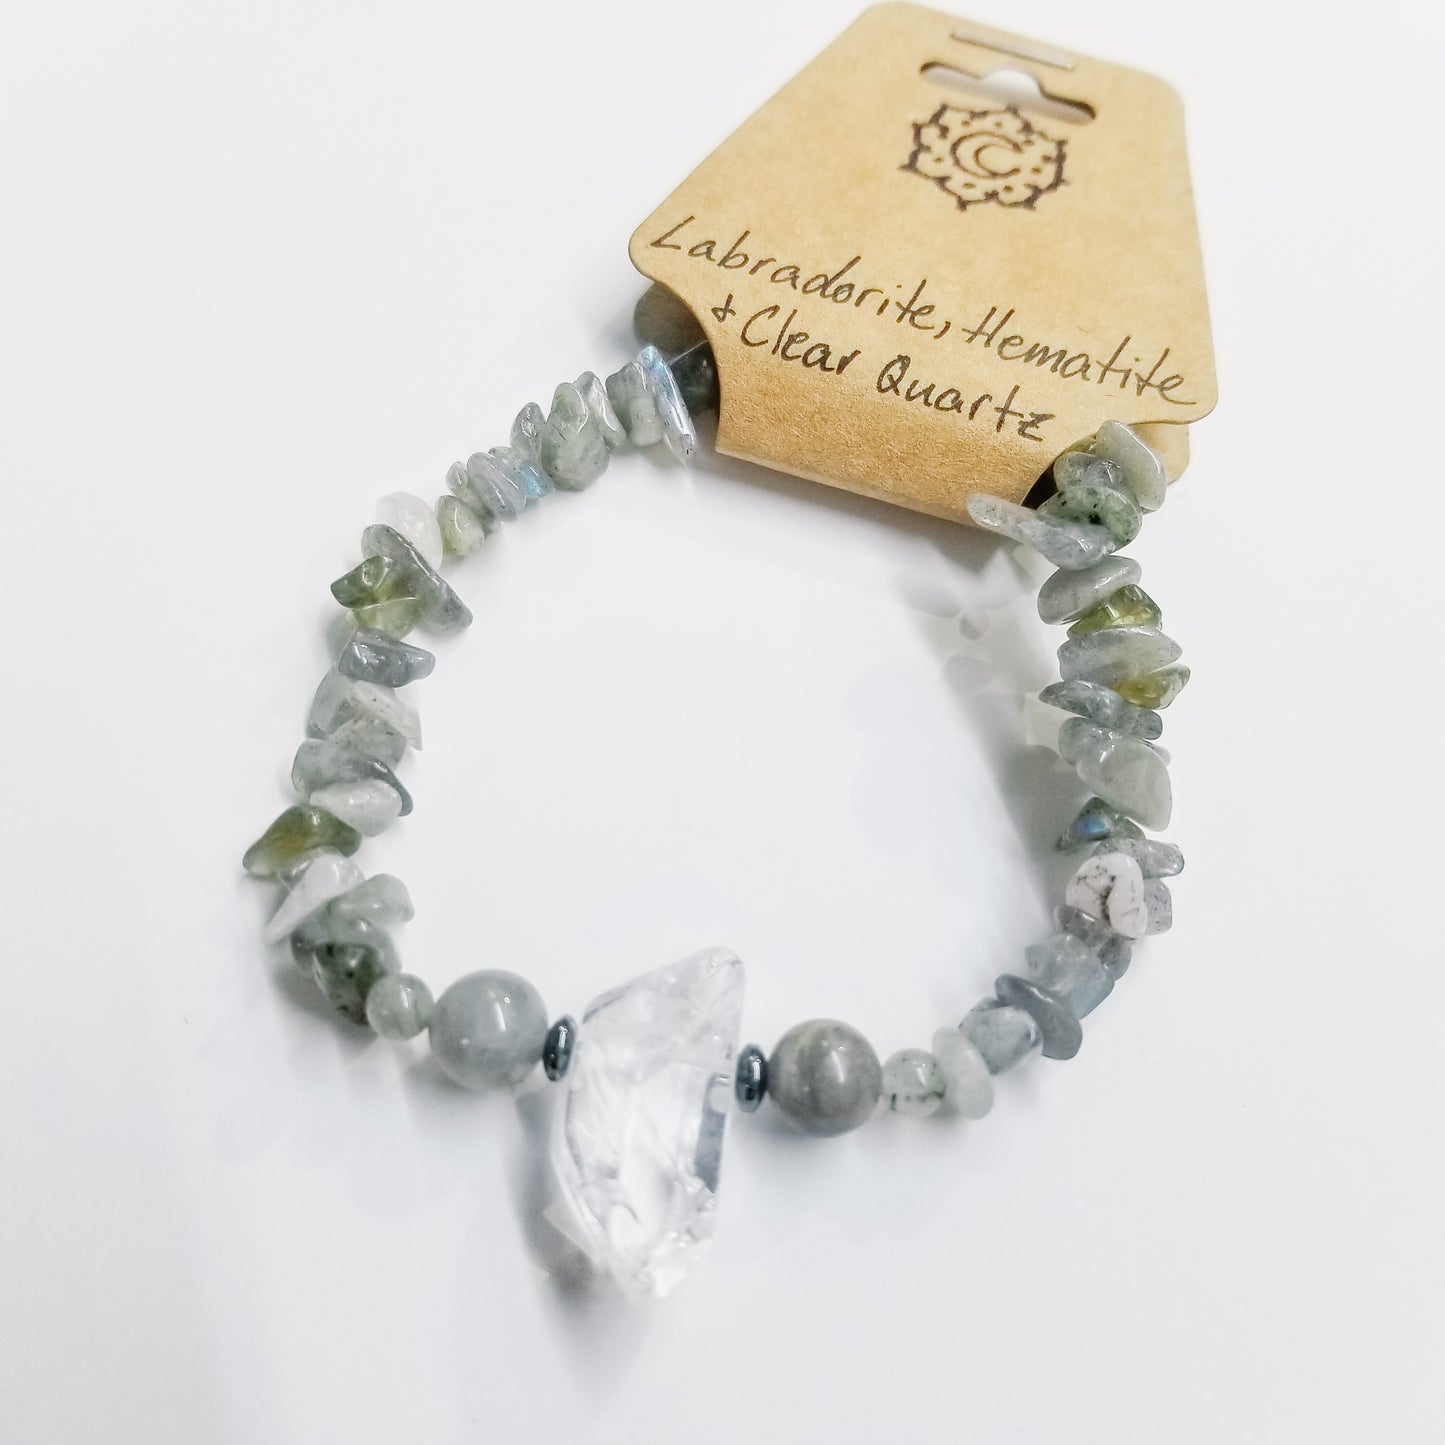 Labradorite, Hematite & Clear Quartz Crystal Bracelet